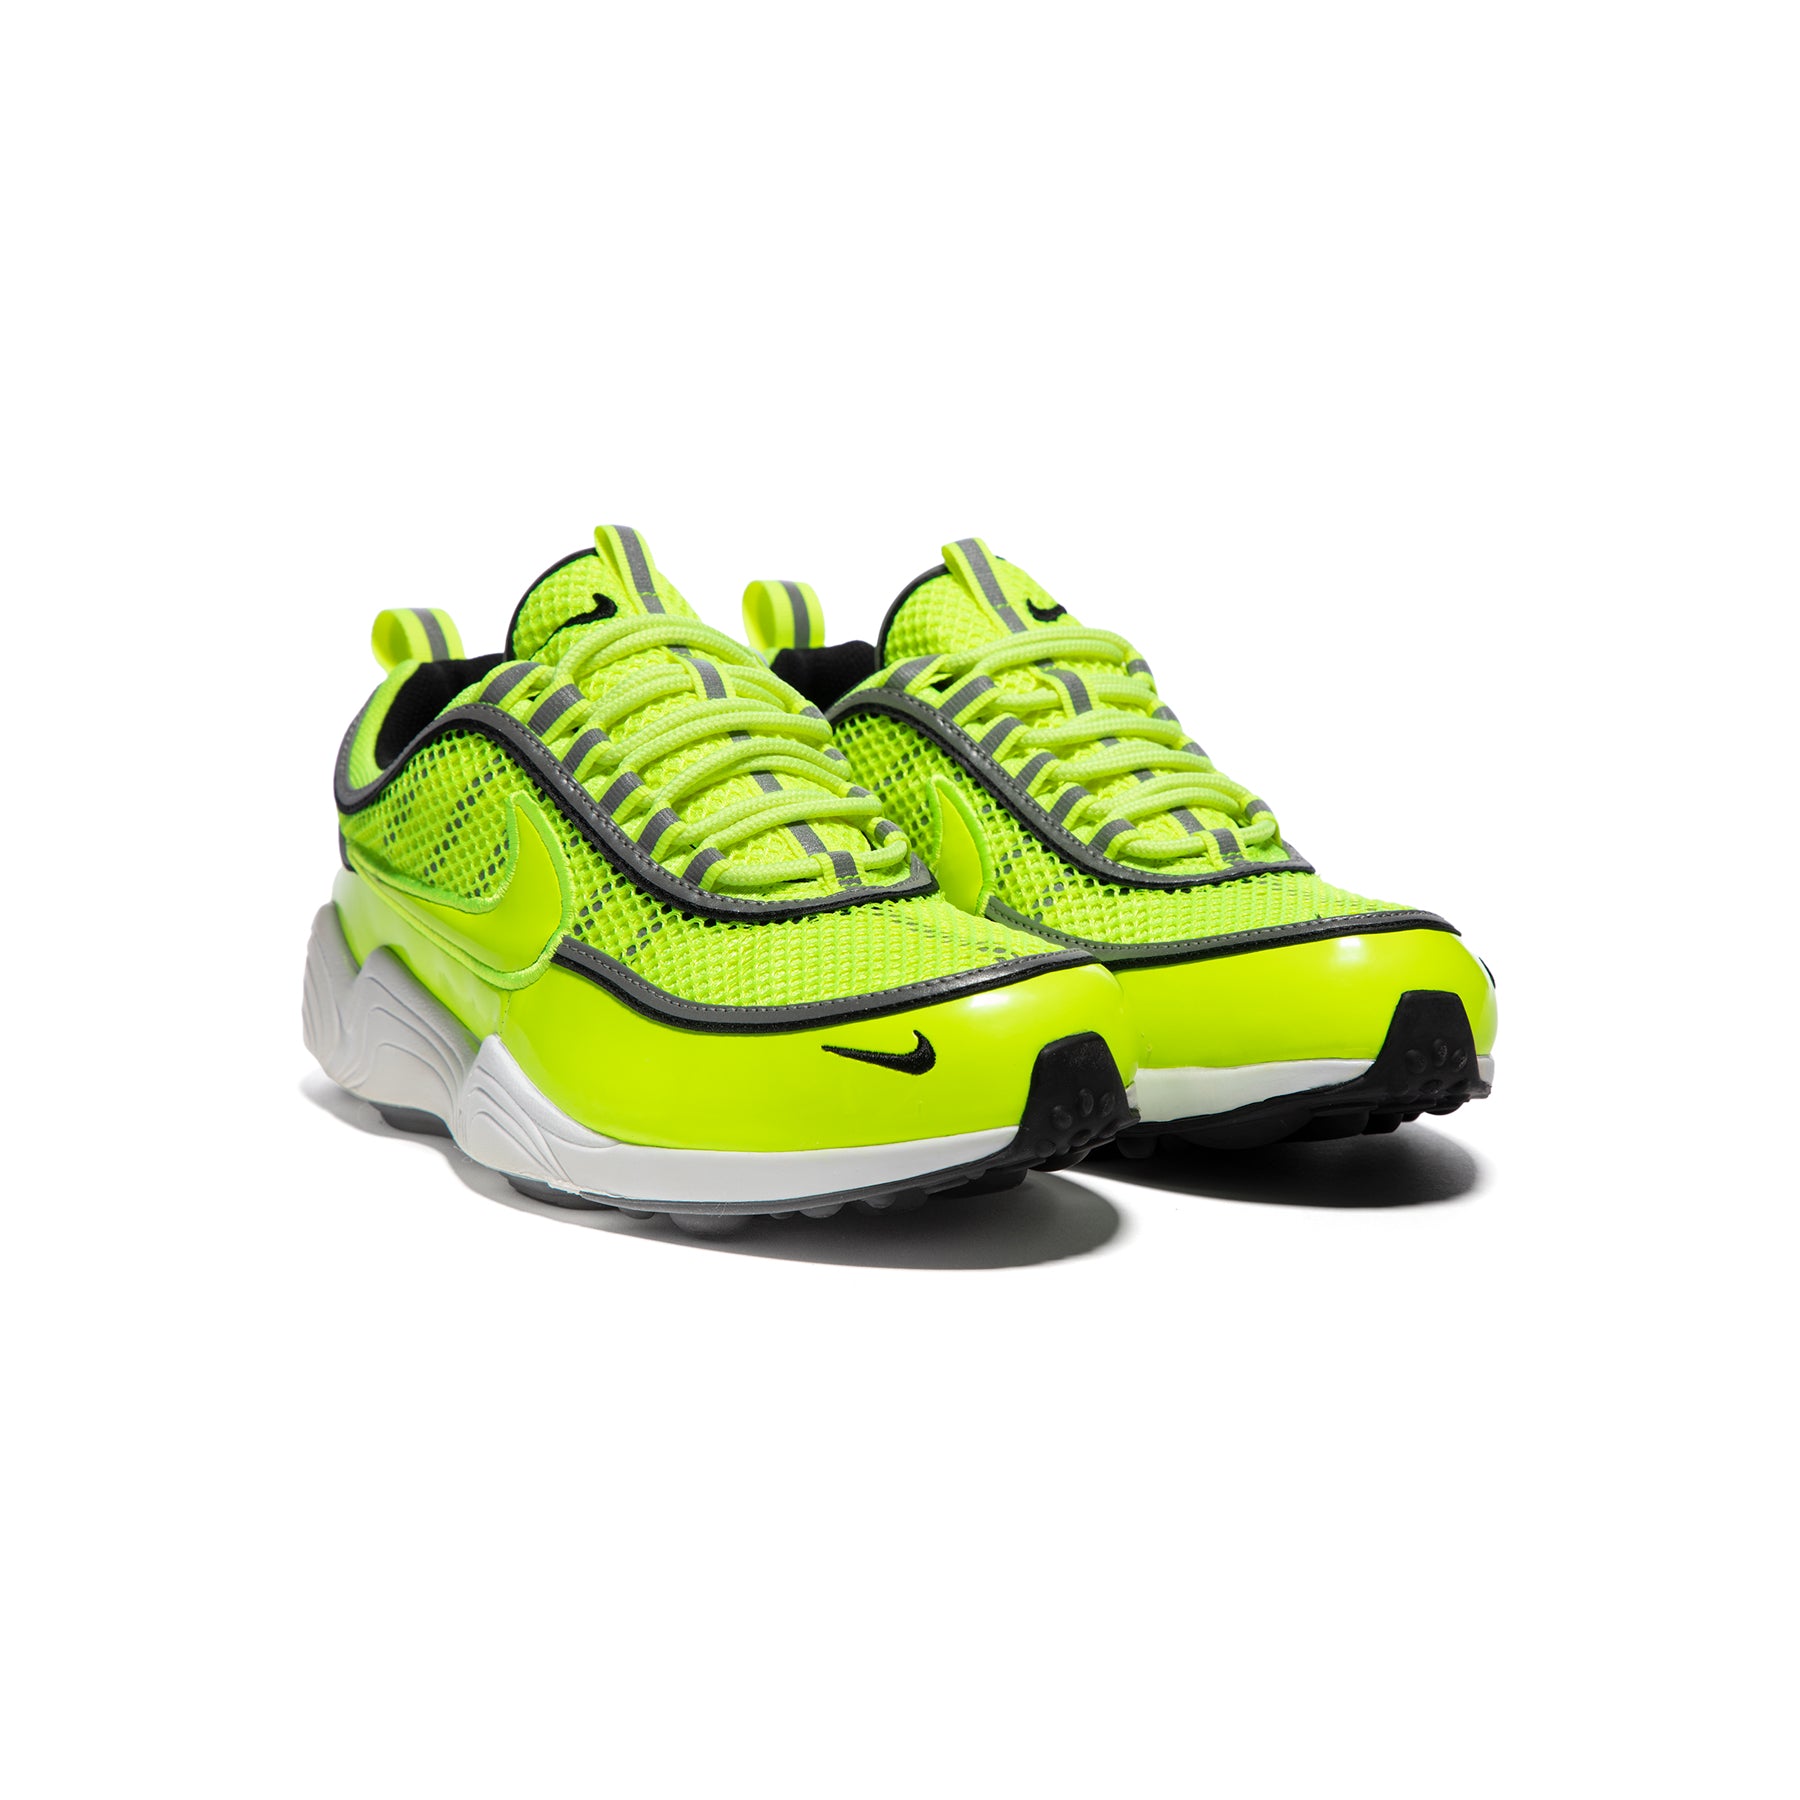 Nike Air Zoom Spiridon (Volt/White/Black) –